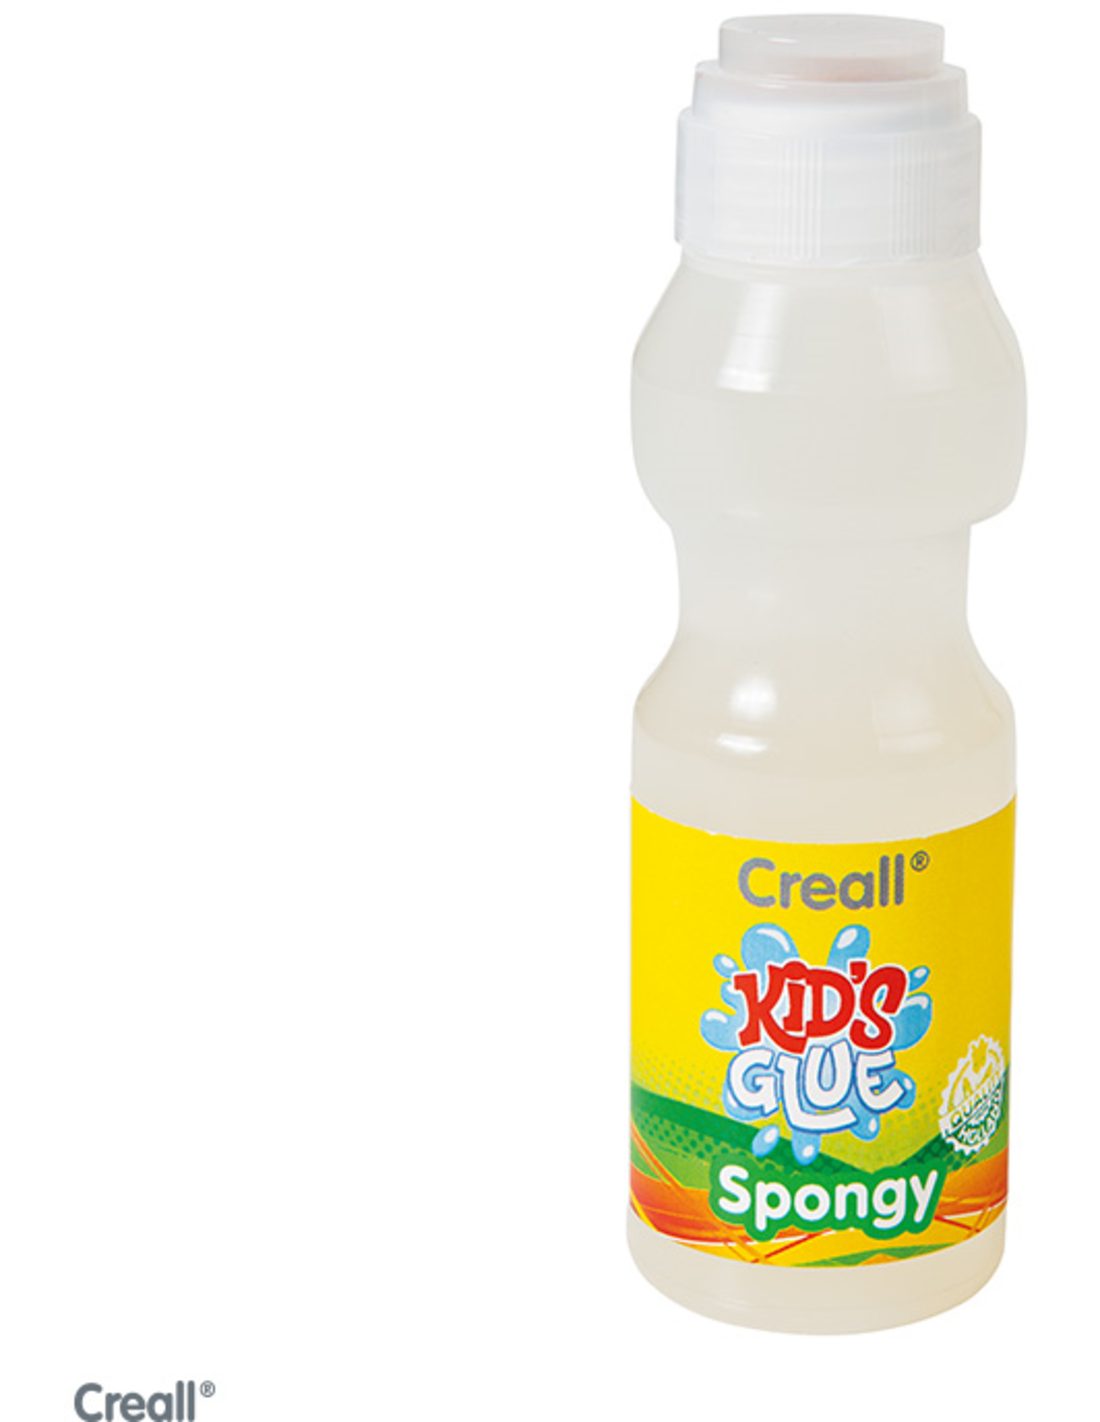 Creall-kid's glue Spongy - 70 ml